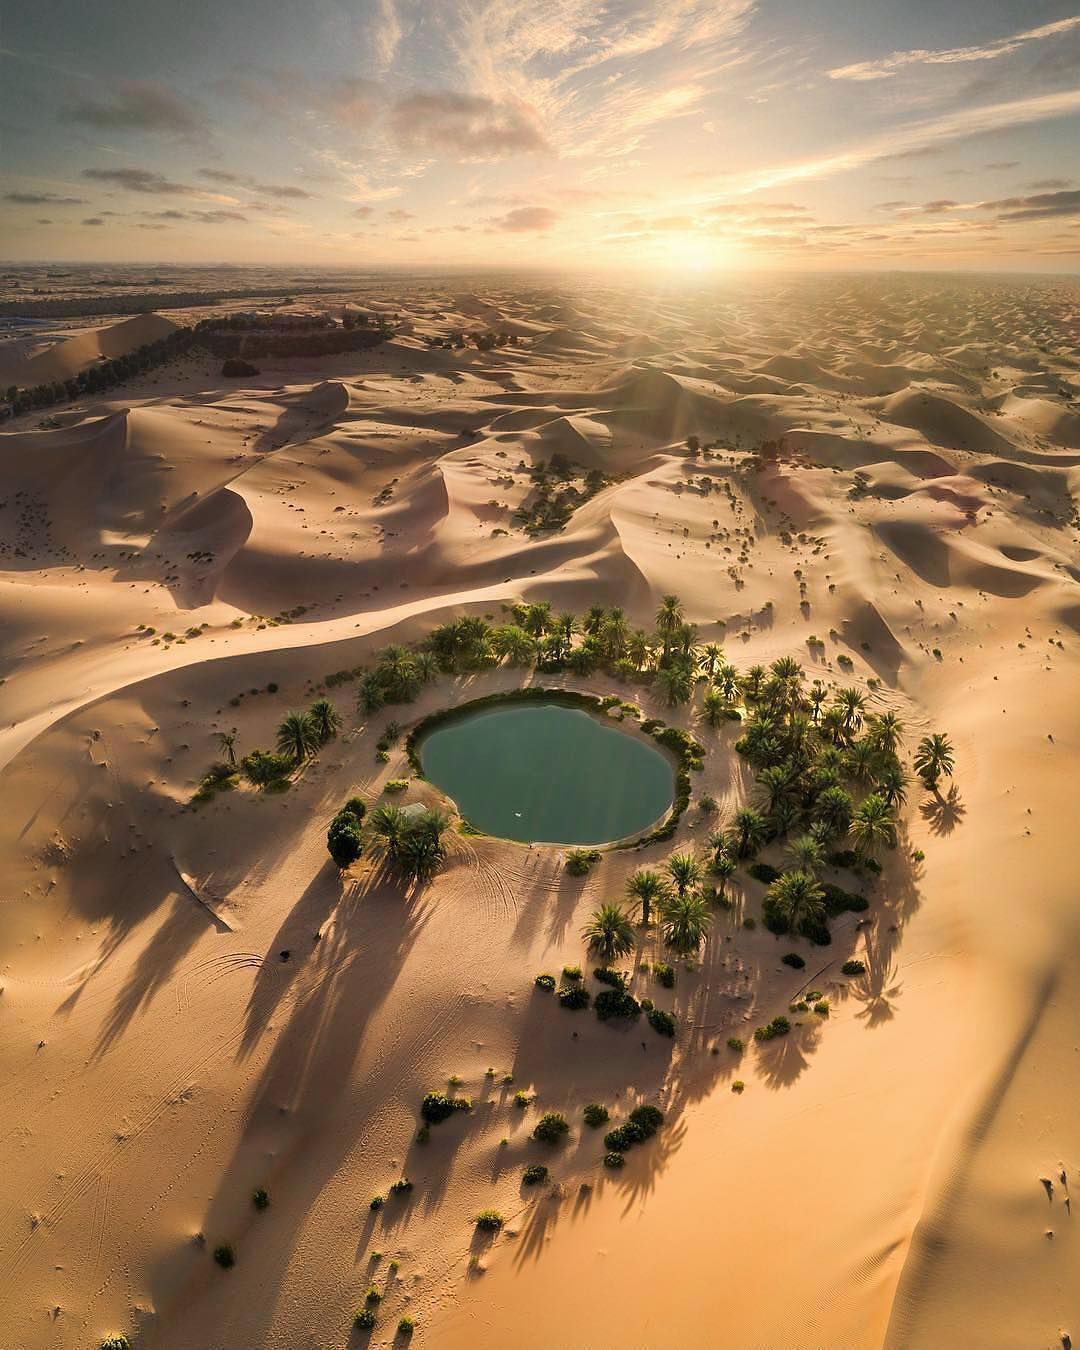 on Twitter: "Beautiful desert oasis #nature https://t.co/3waPzeHbmz" Twitter